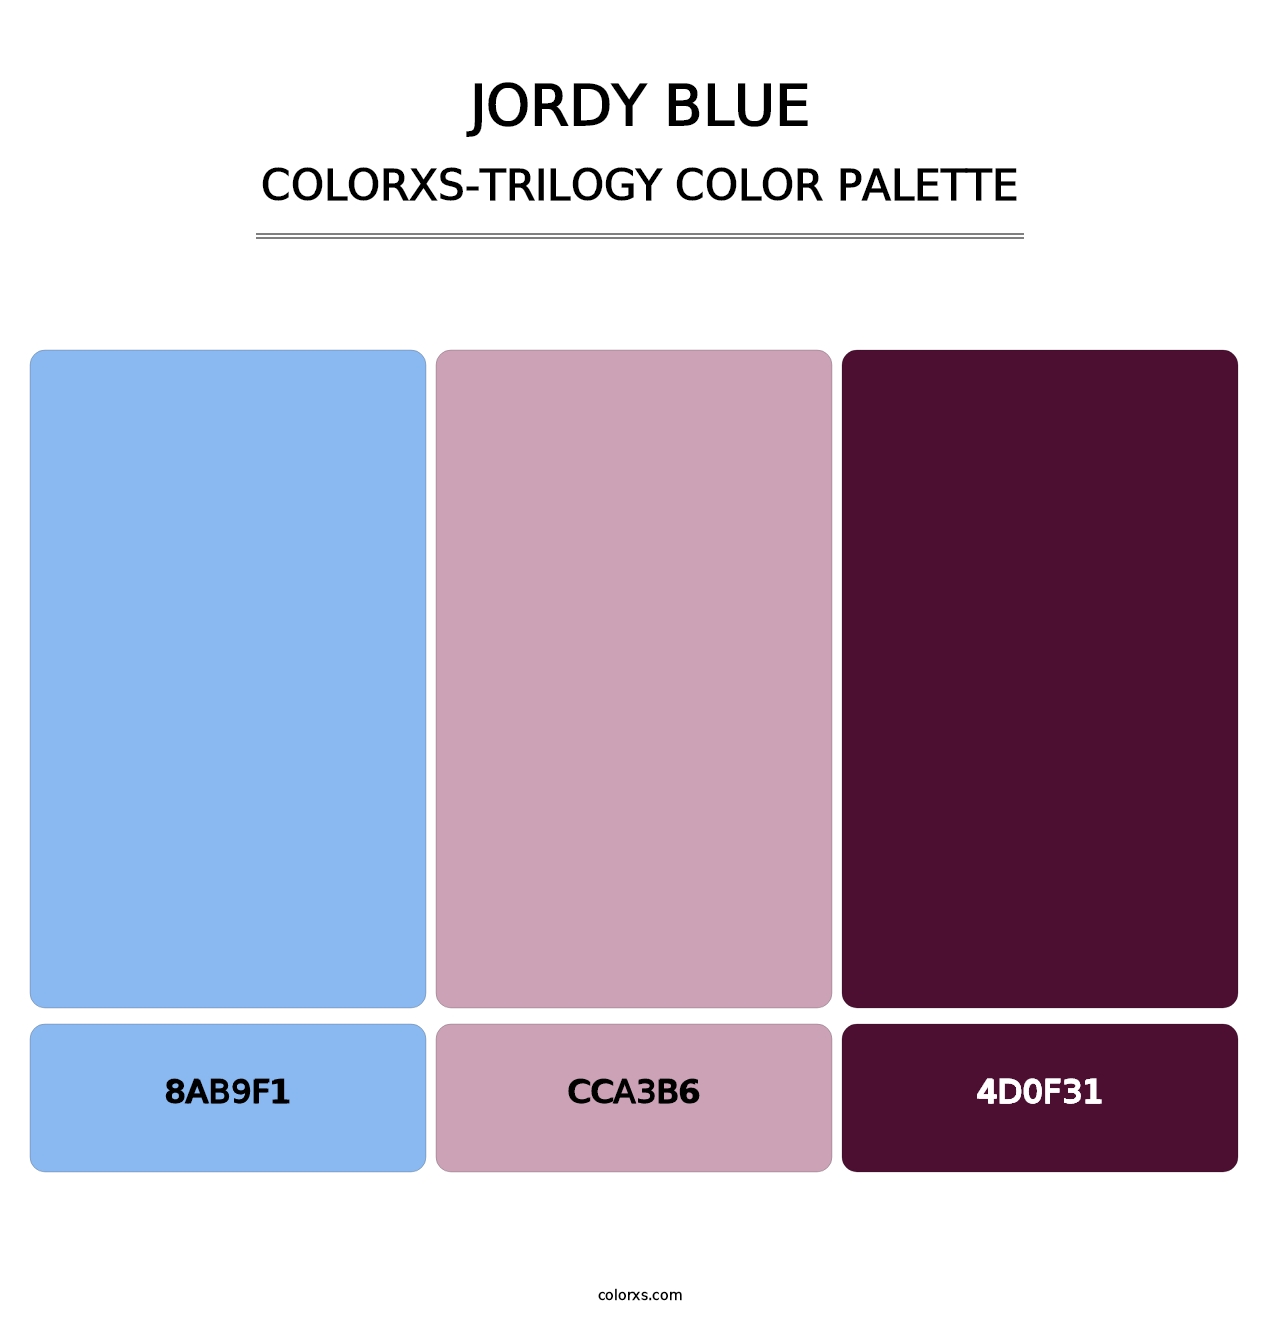 Jordy Blue - Colorxs Trilogy Palette